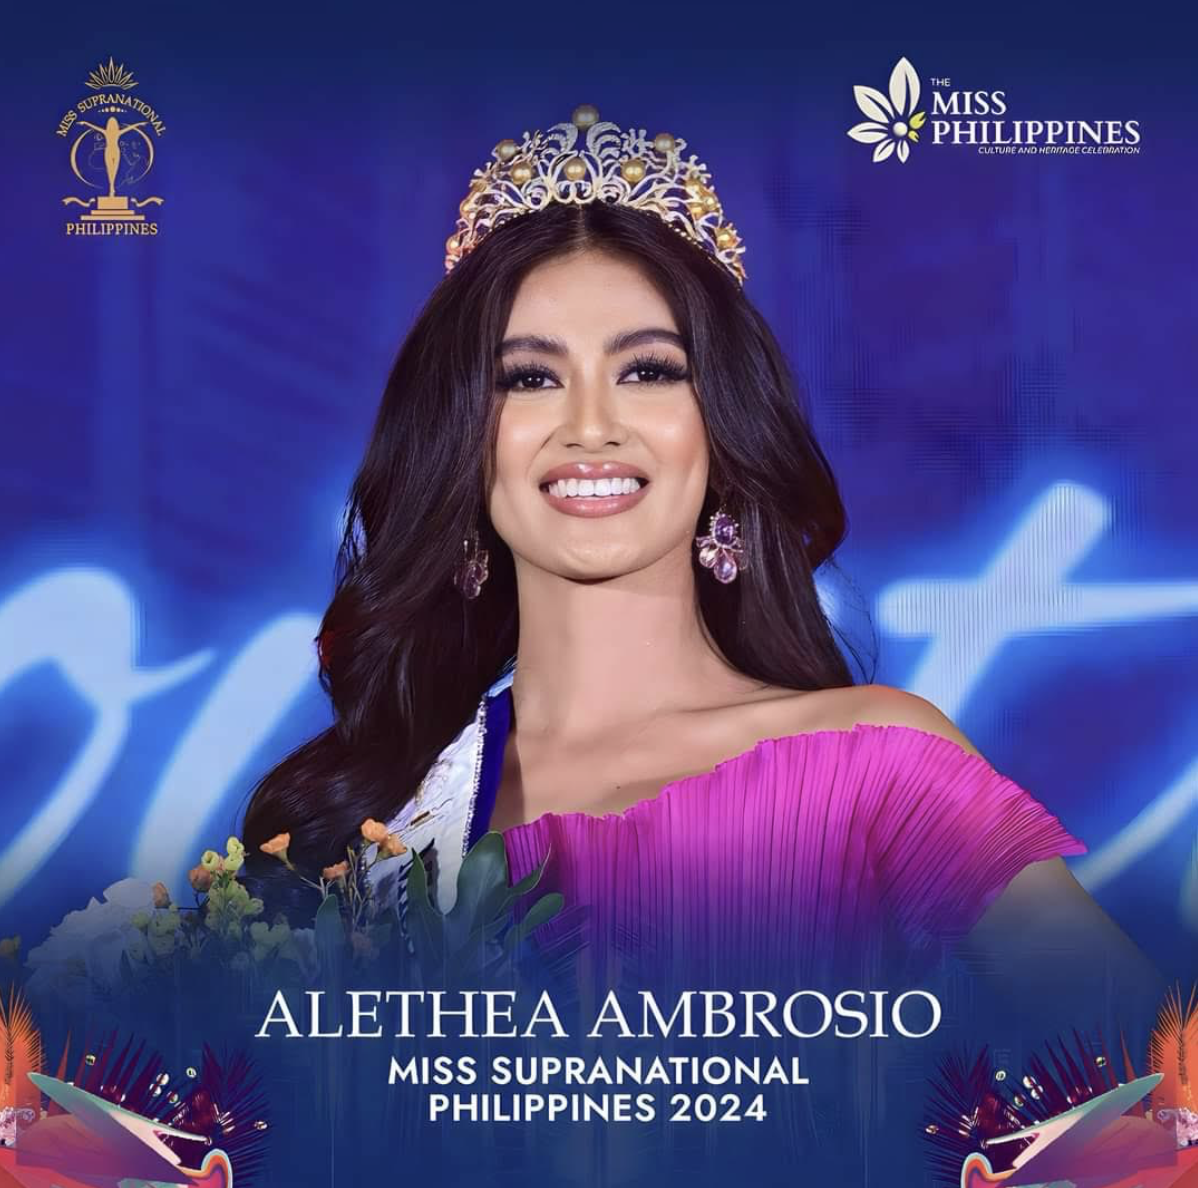 Alethea Ambrosio is Miss Supranational Philippines